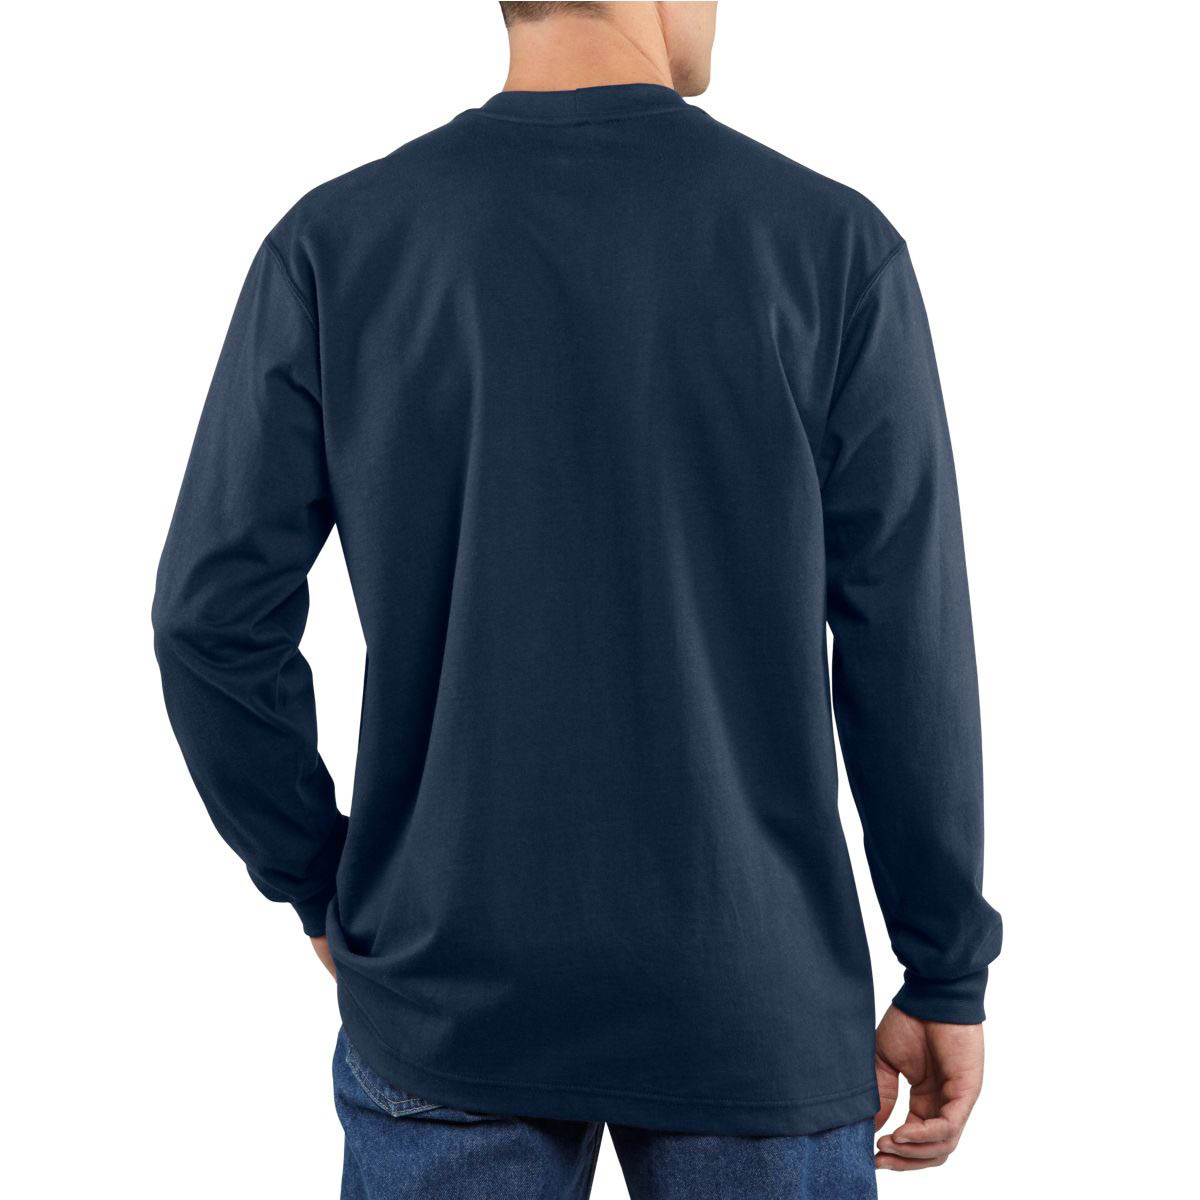 Carhartt Men's Flame Resistant Force Cotton Long Sleeve T Shirt